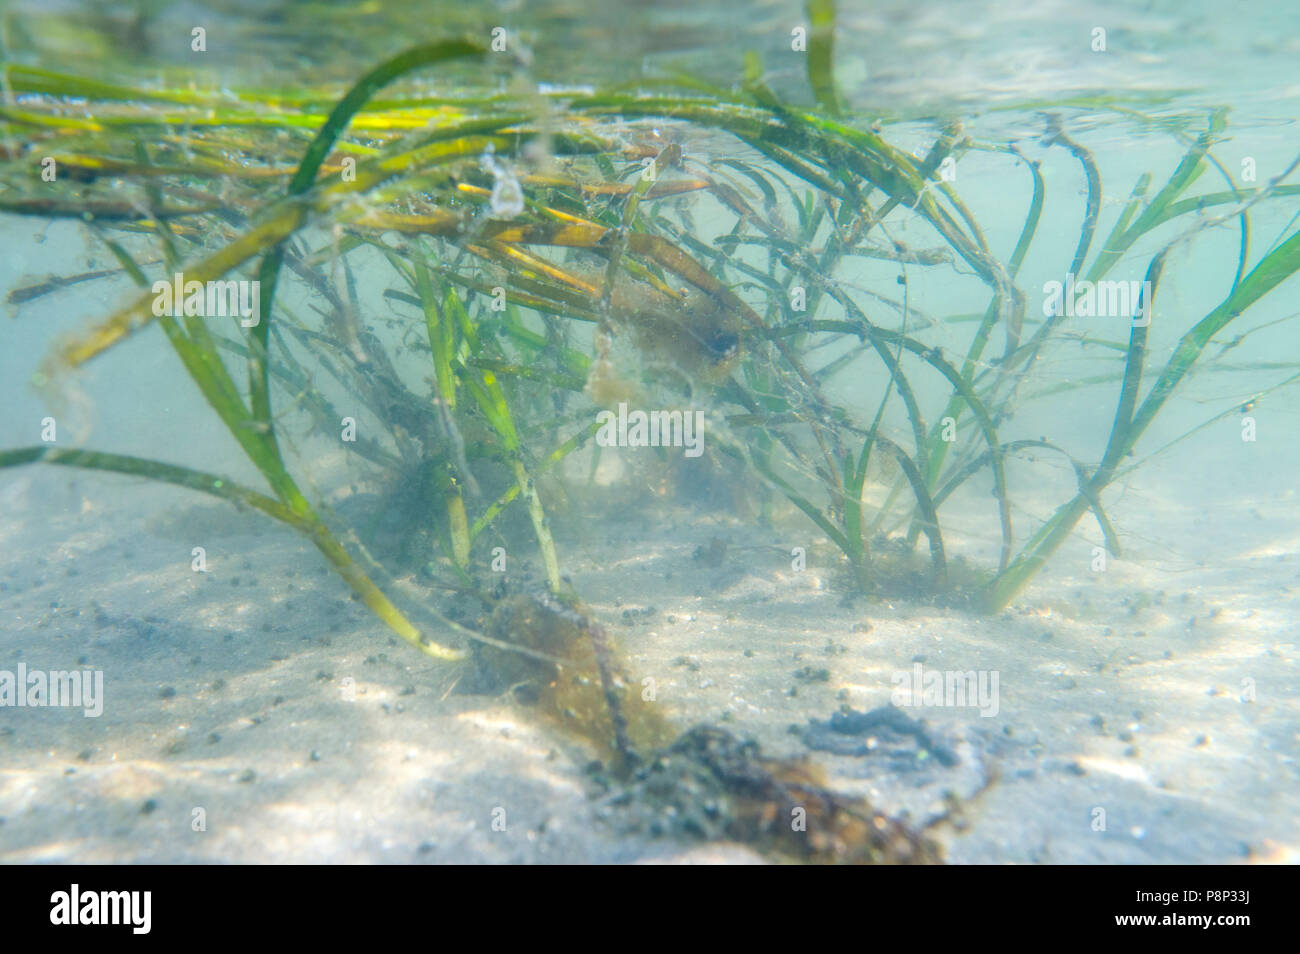 Common eelgrass plant underwater at hightide Stock Photo